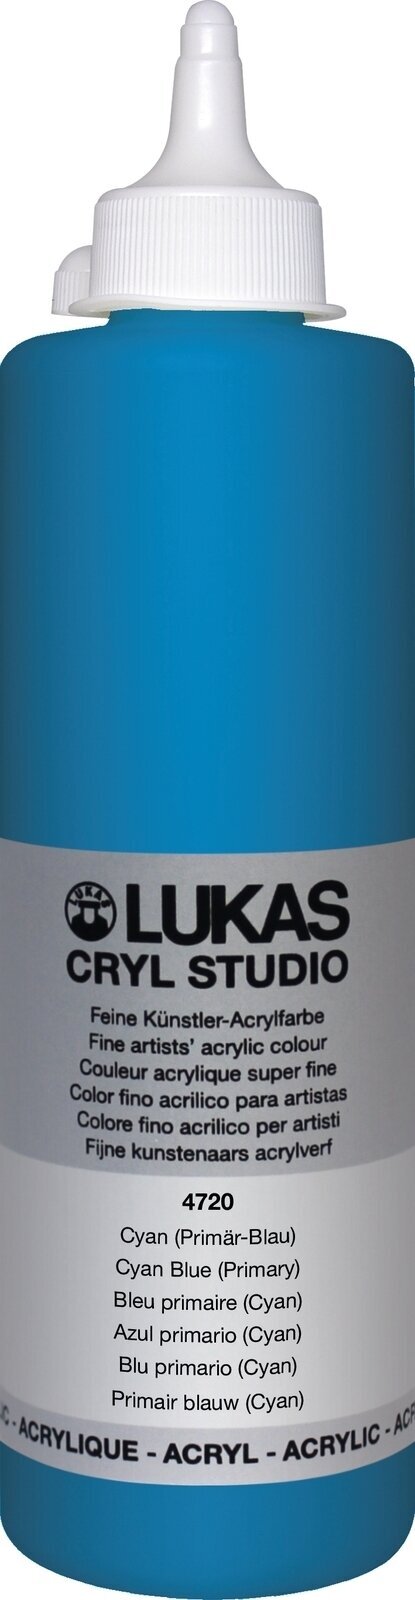 Acrylverf Lukas Cryl Studio Acrylverf 500 ml Cyan Blue (Primary)